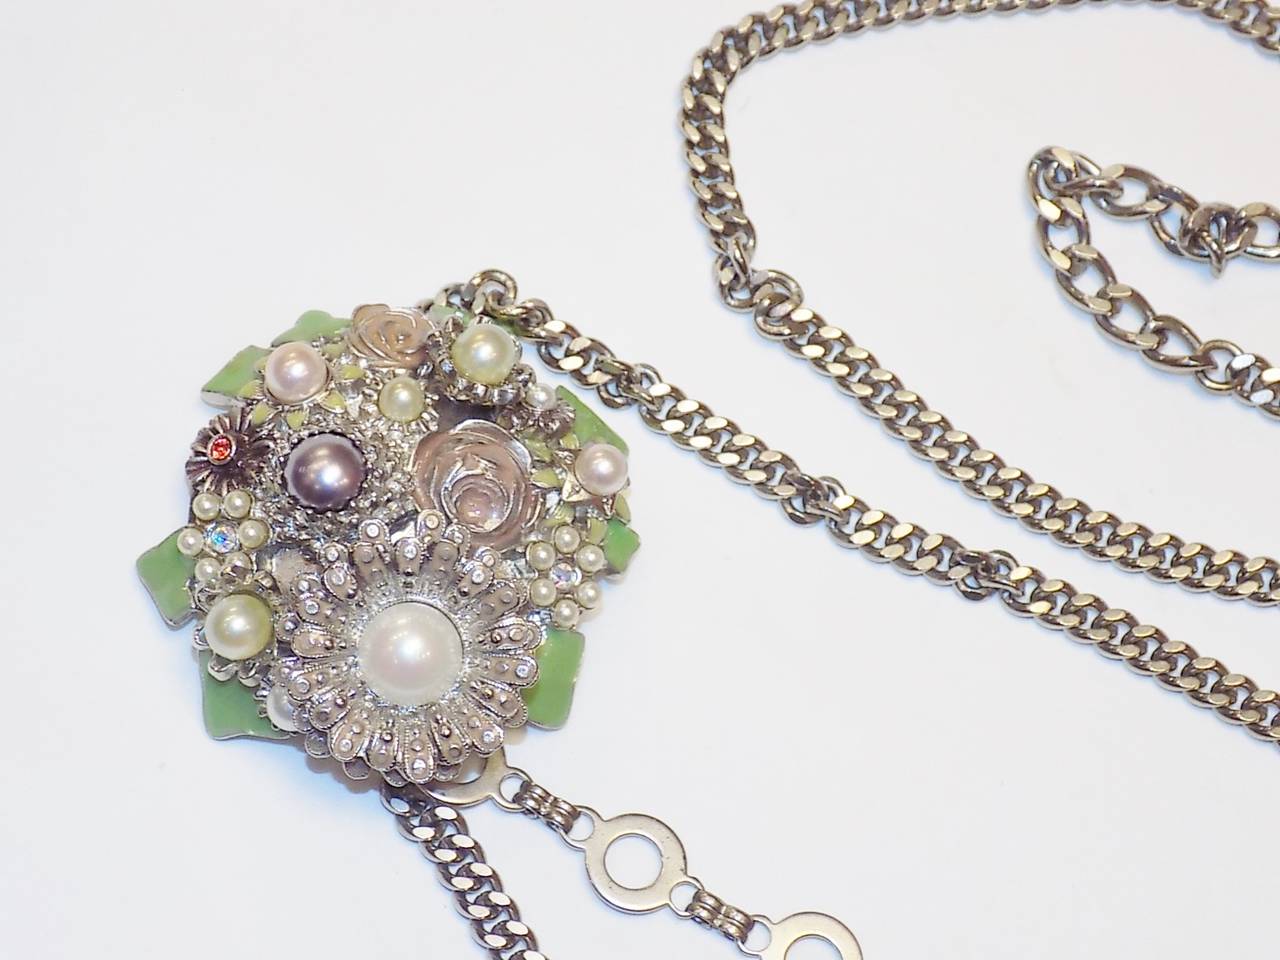 Women's CHANEL chain  Belt with  Flower Crystal, Enamel, Pearl/ necklace